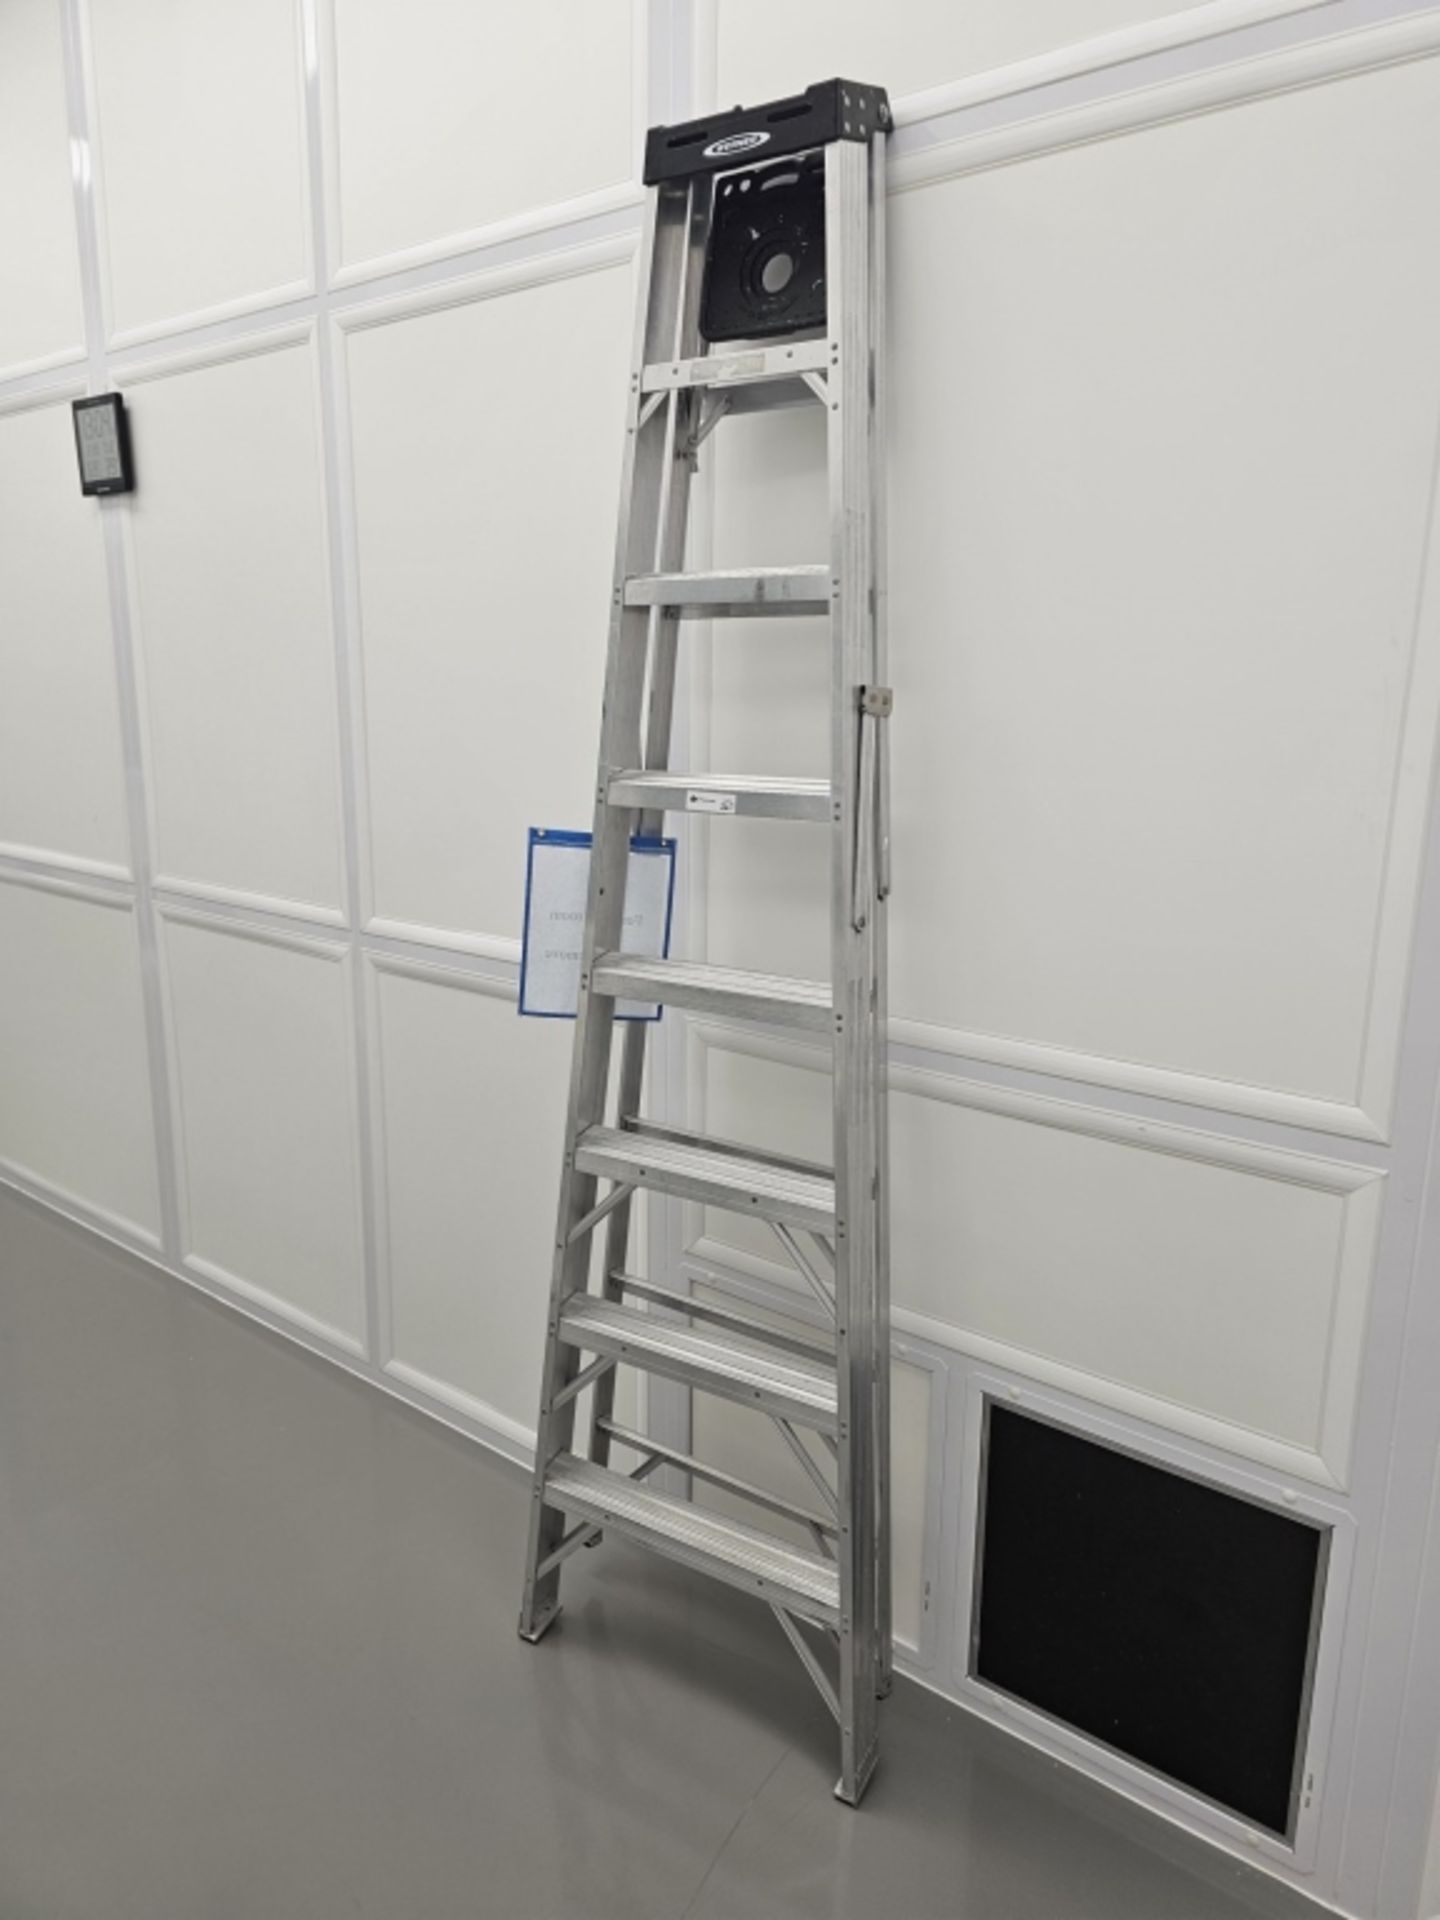 Werner 6' Folding Aluminum Ladder - Image 2 of 2